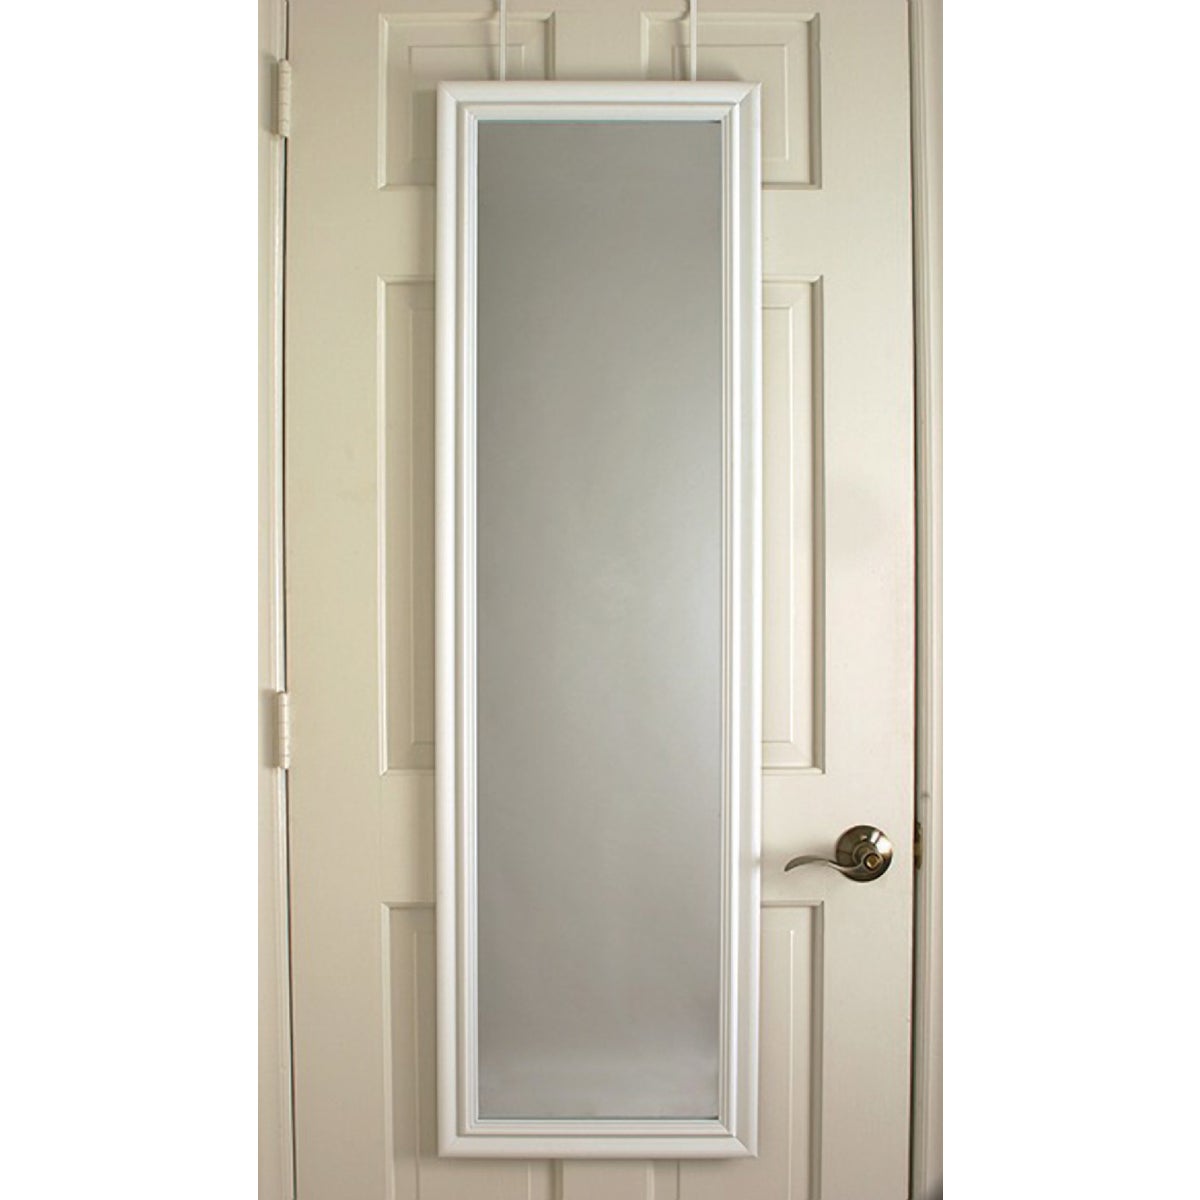 Item 264430, 15" W x 51" H, white framed door mirror. Frame made of MDF board.